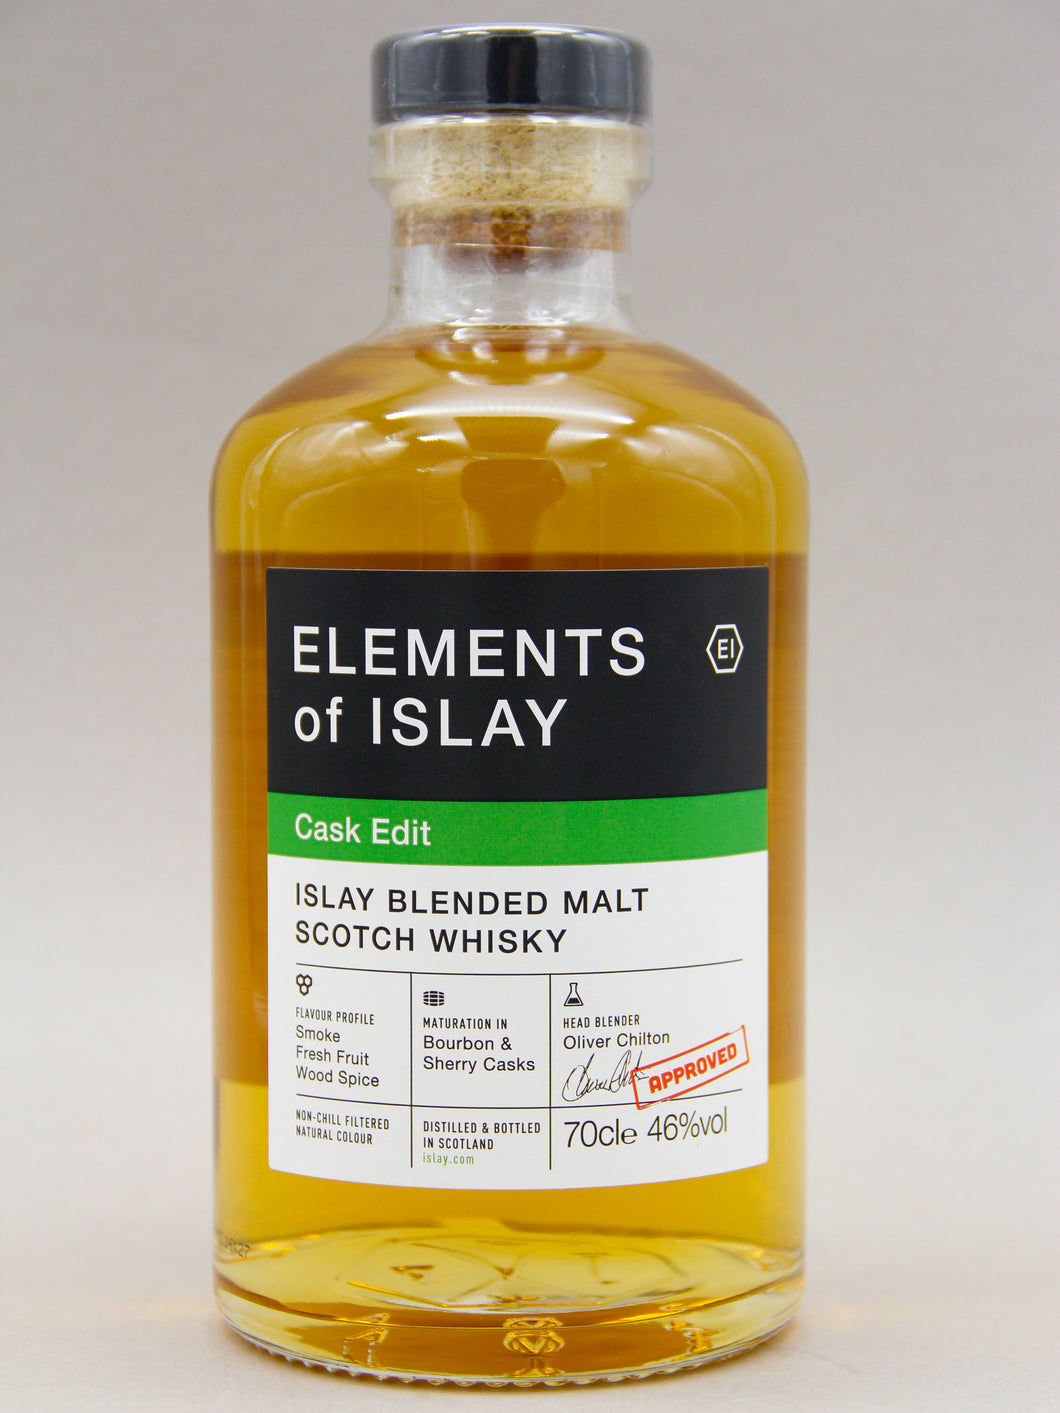 Elements of Islay, Cask Edit, Islay Blended Malt Scotch Whisky (46%, 70cl)